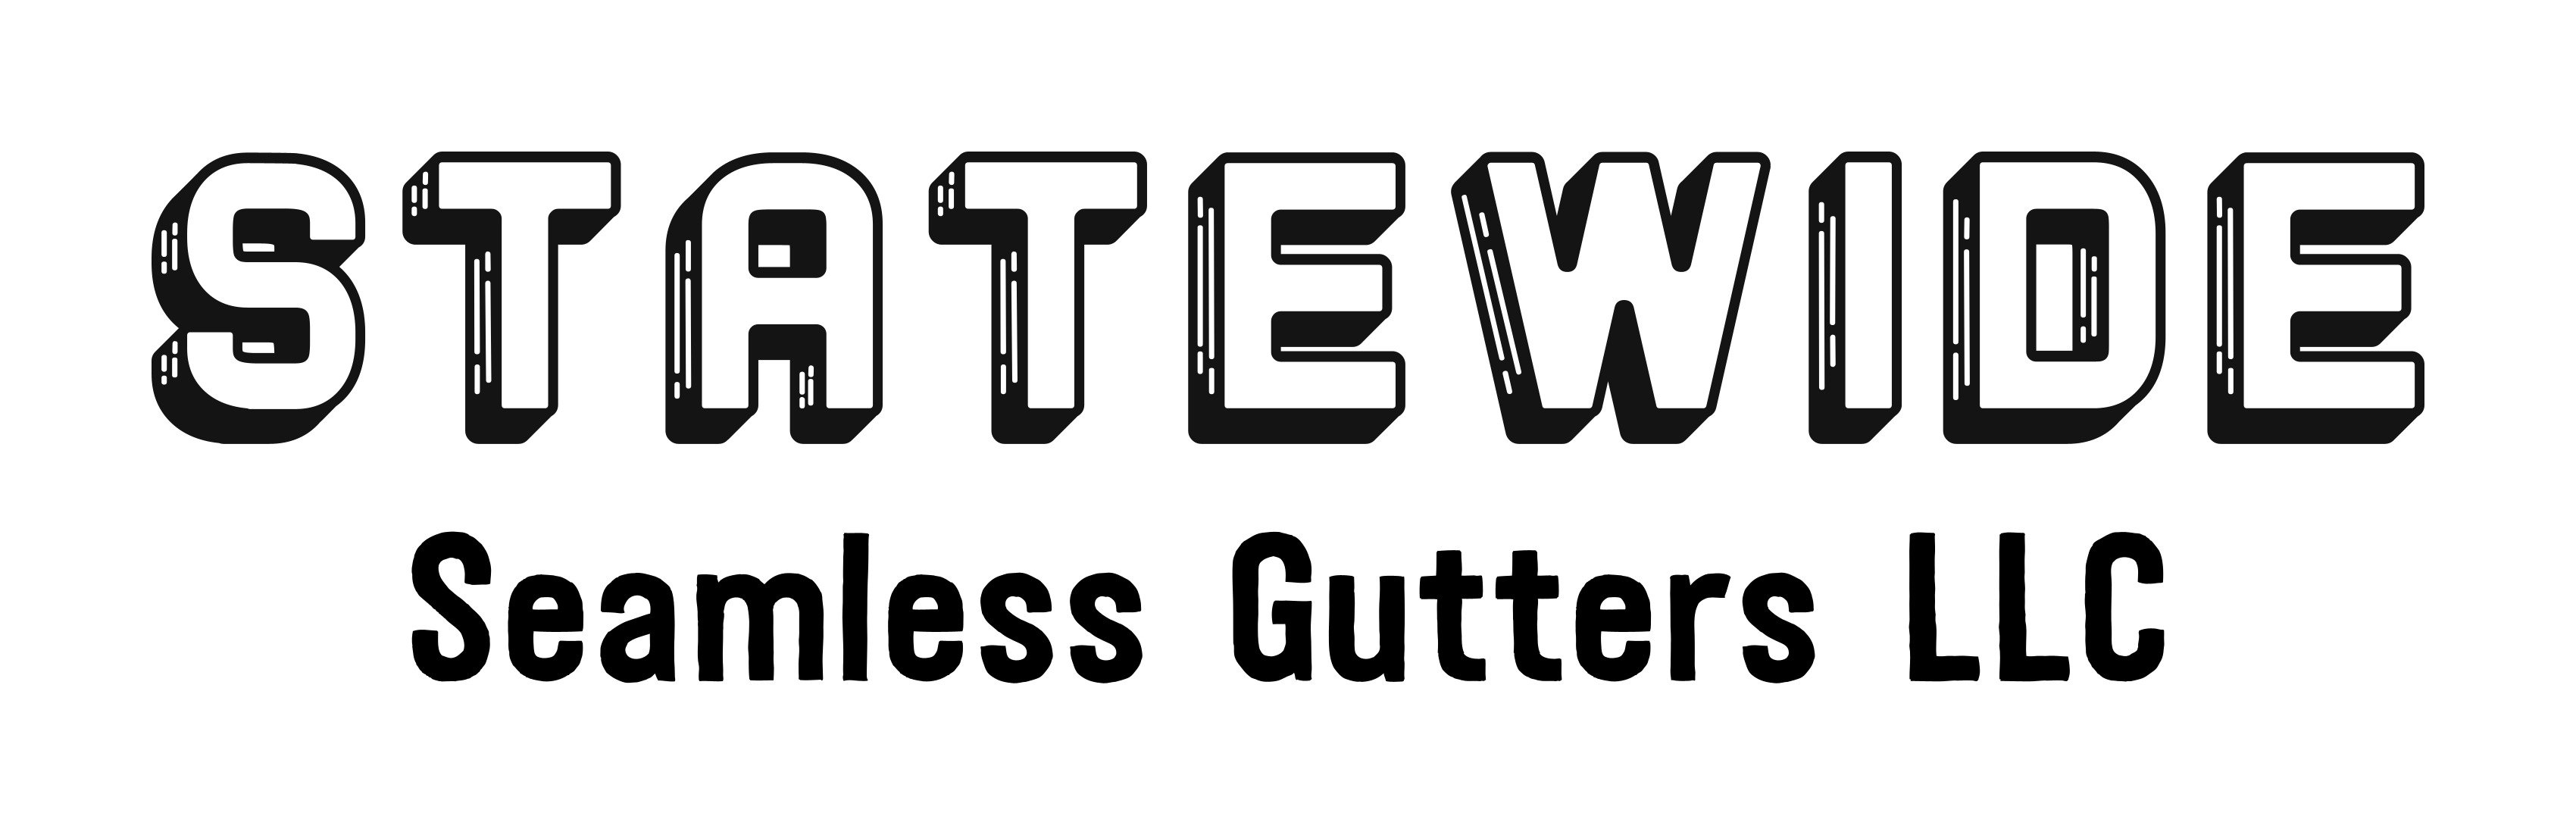 Statewide Seamless Gutters LLC Logo